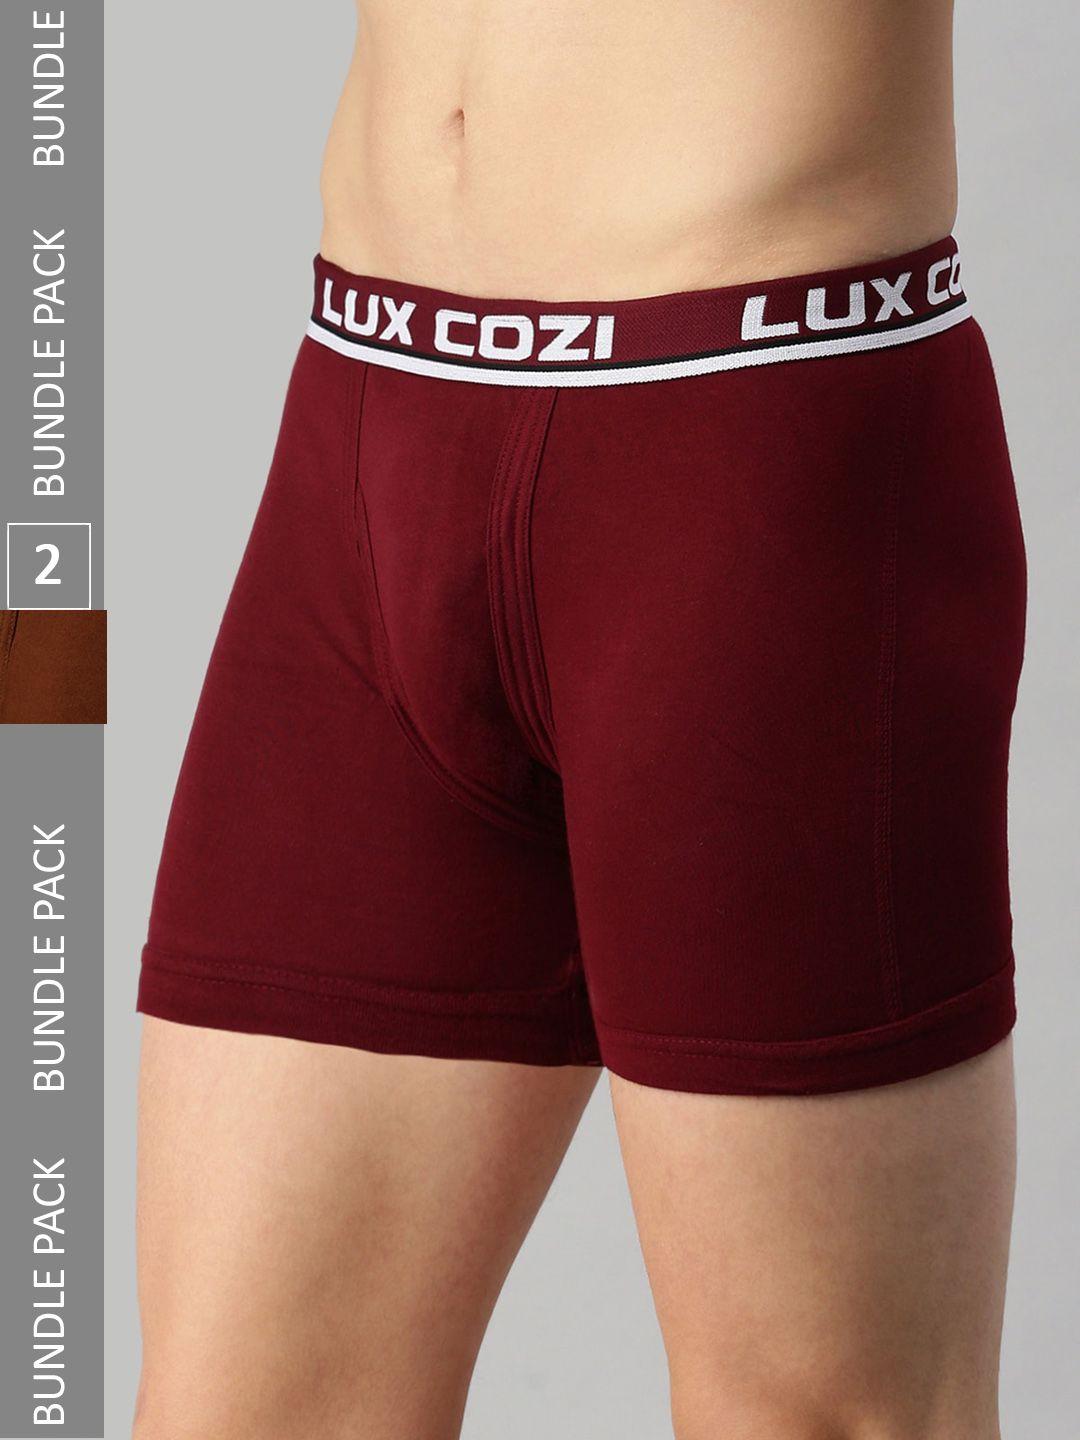 lux cozi men pack of 2 logo printed outer elastic trunks